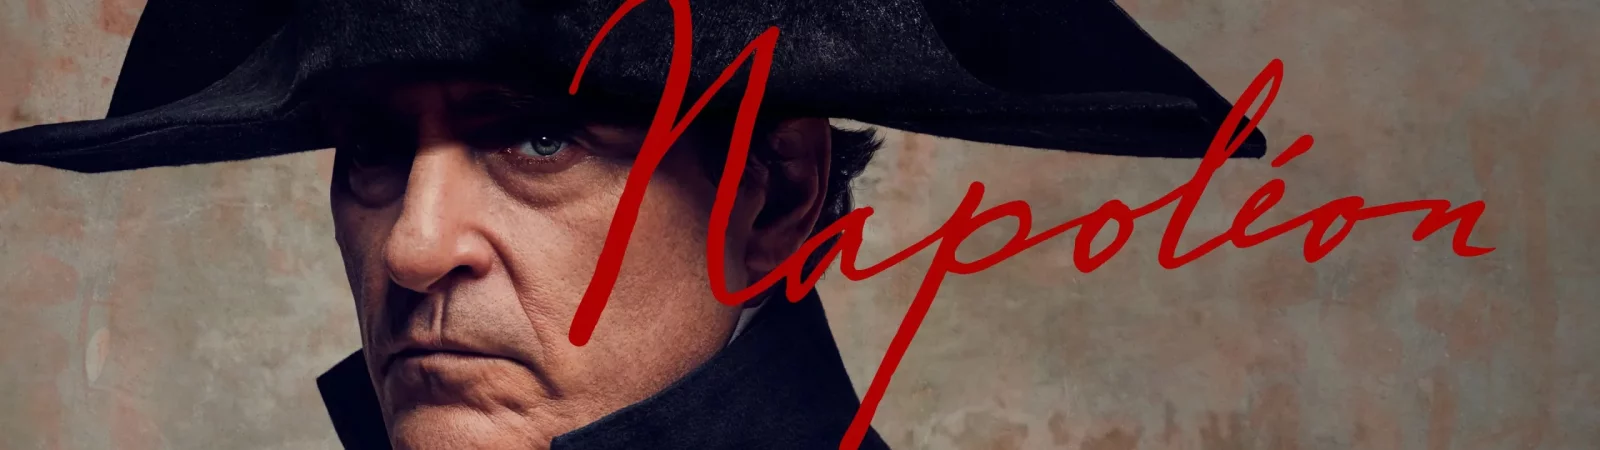 Photo du film : Napoleon